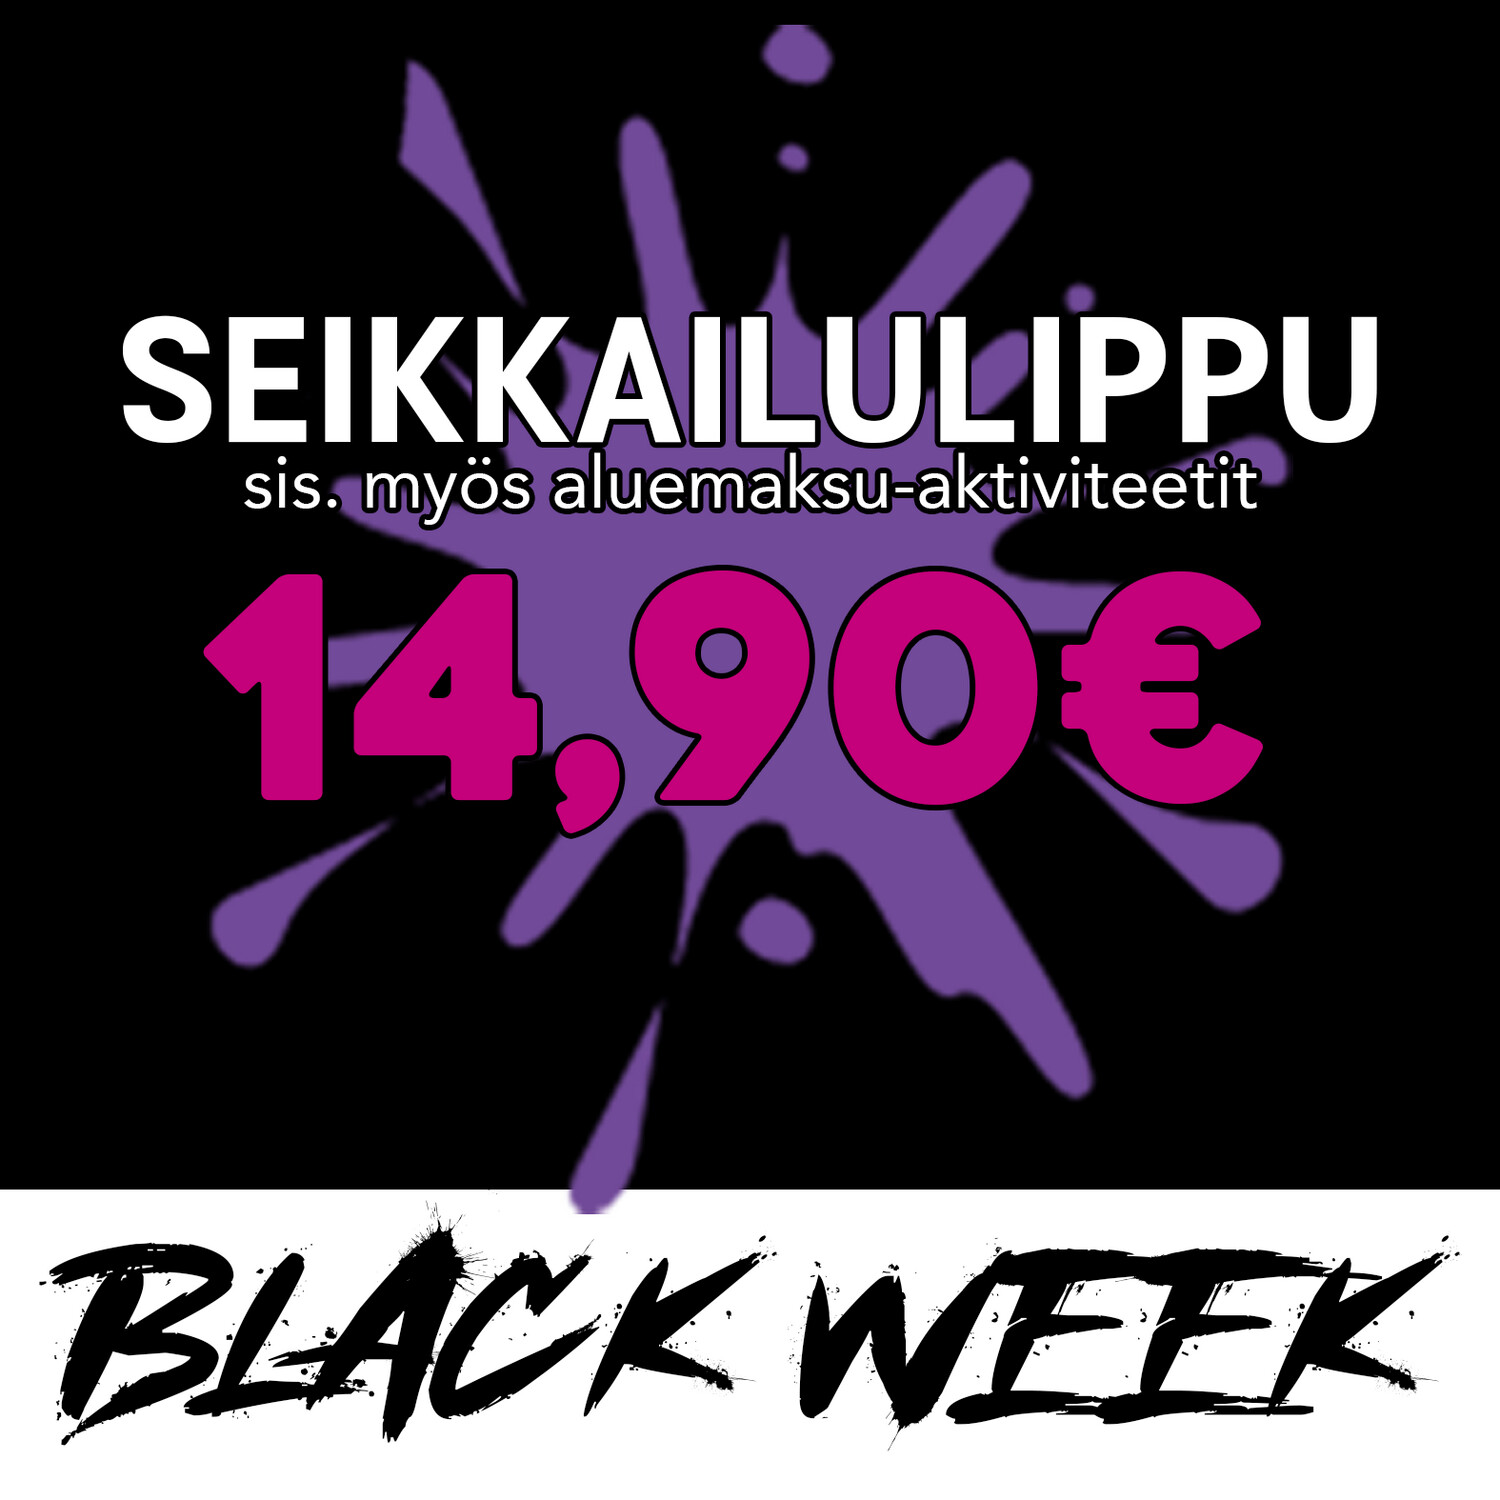 Black Week - Seikkailulippu 2023